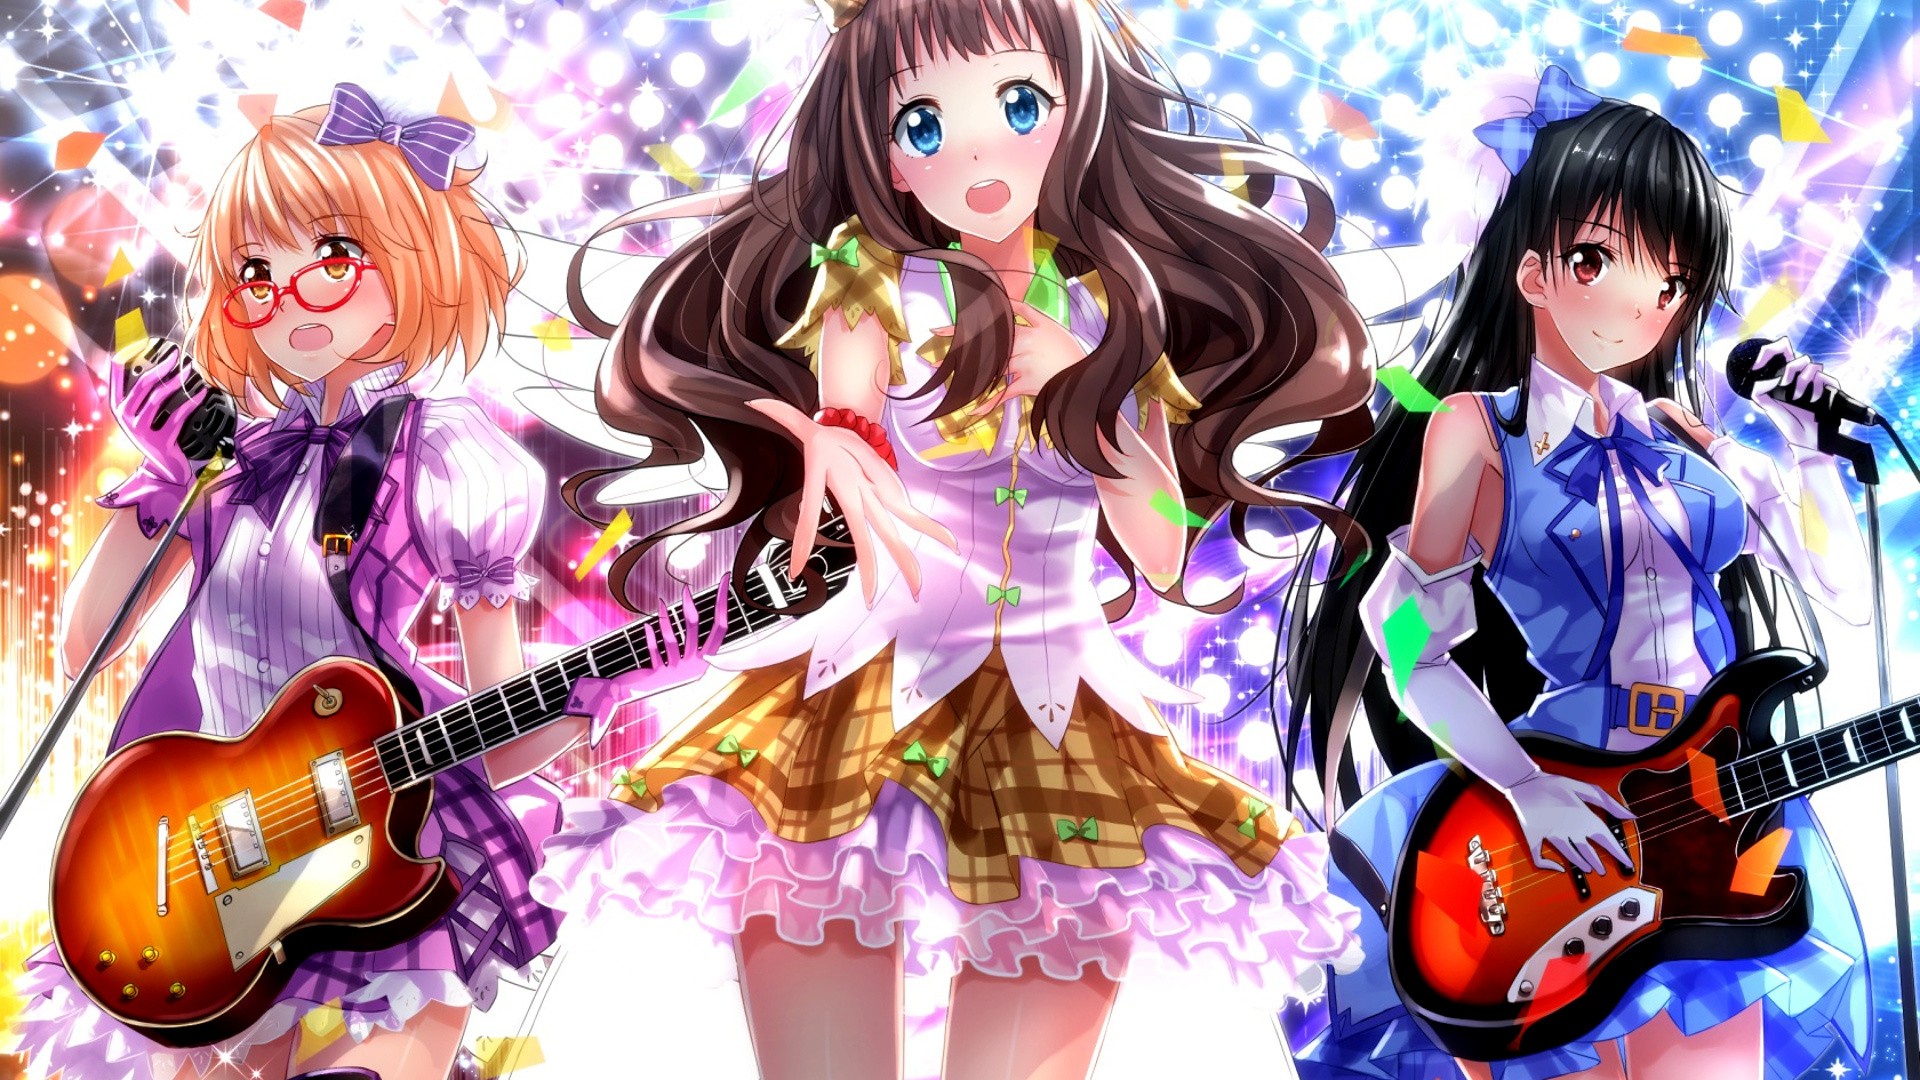 Anime 1920x1080 anime girls Kyoukai no Kanata artwork guitar musical instrument anime women trio women with glasses brunette long hair blue eyes black hair band music